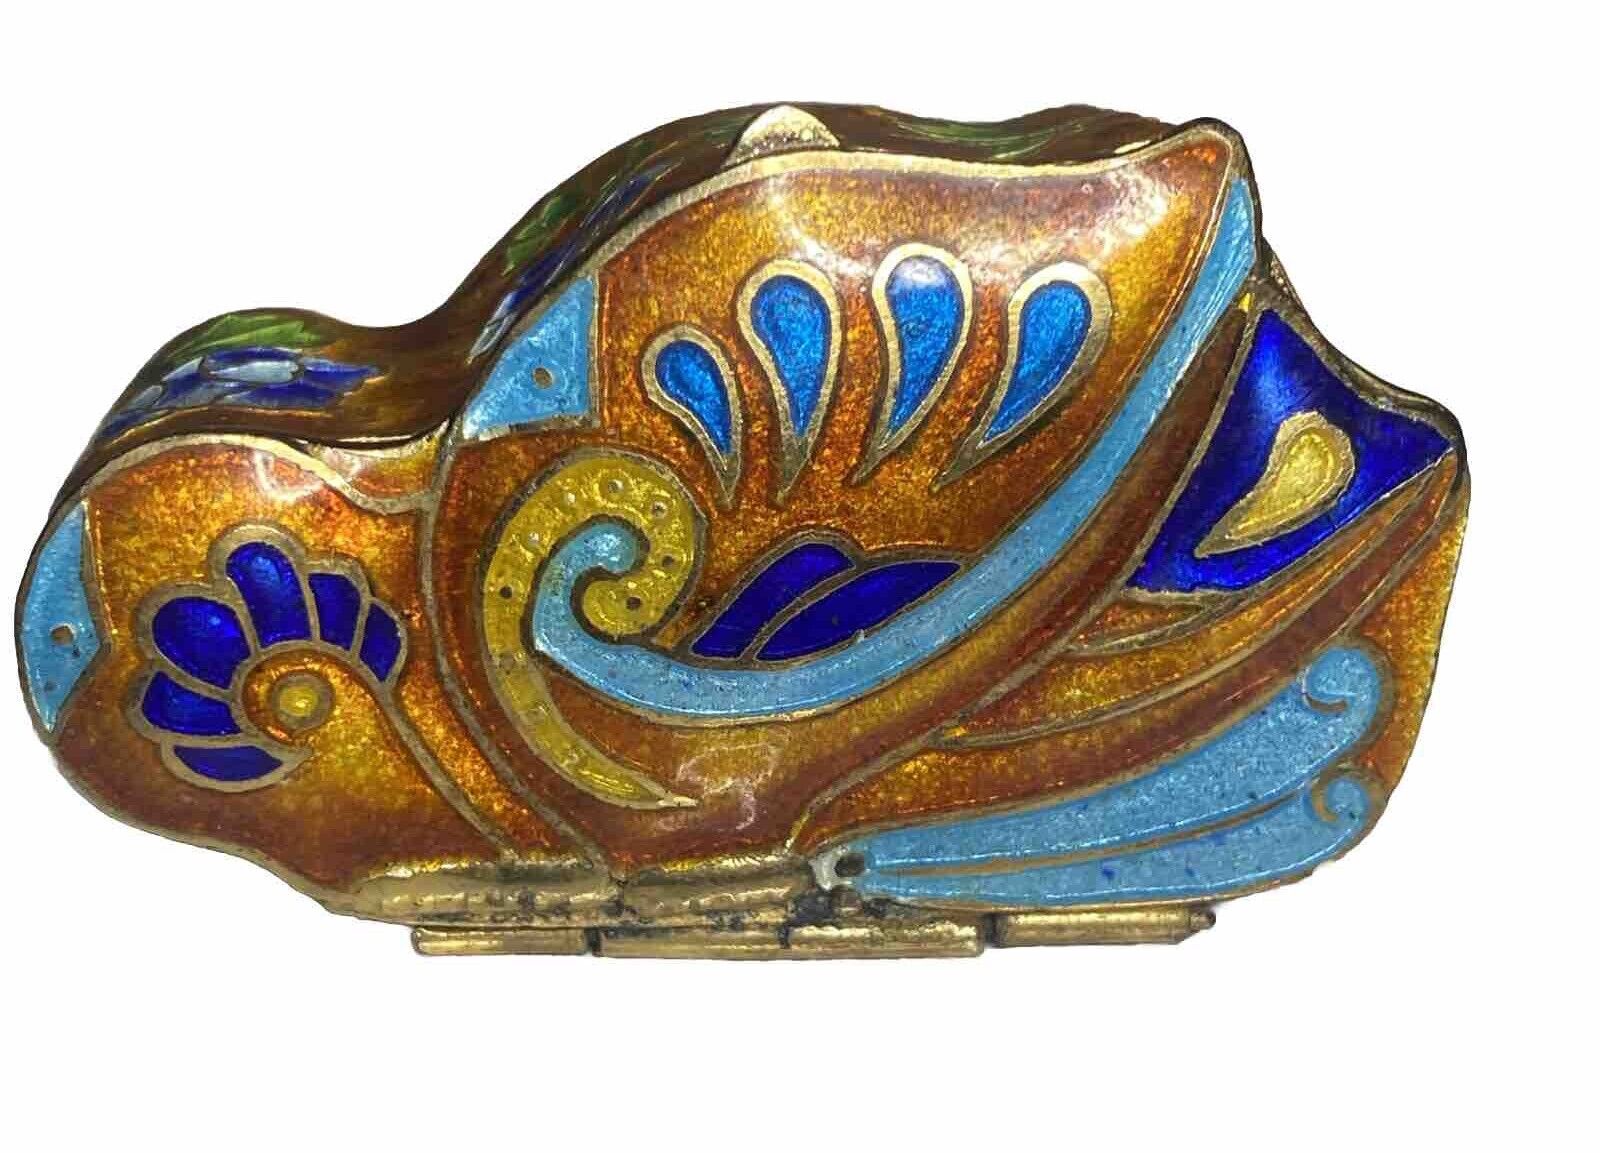 Vintage Cloisonne Enamel Unusual -Shaped Trinket Box With Peacock Motif